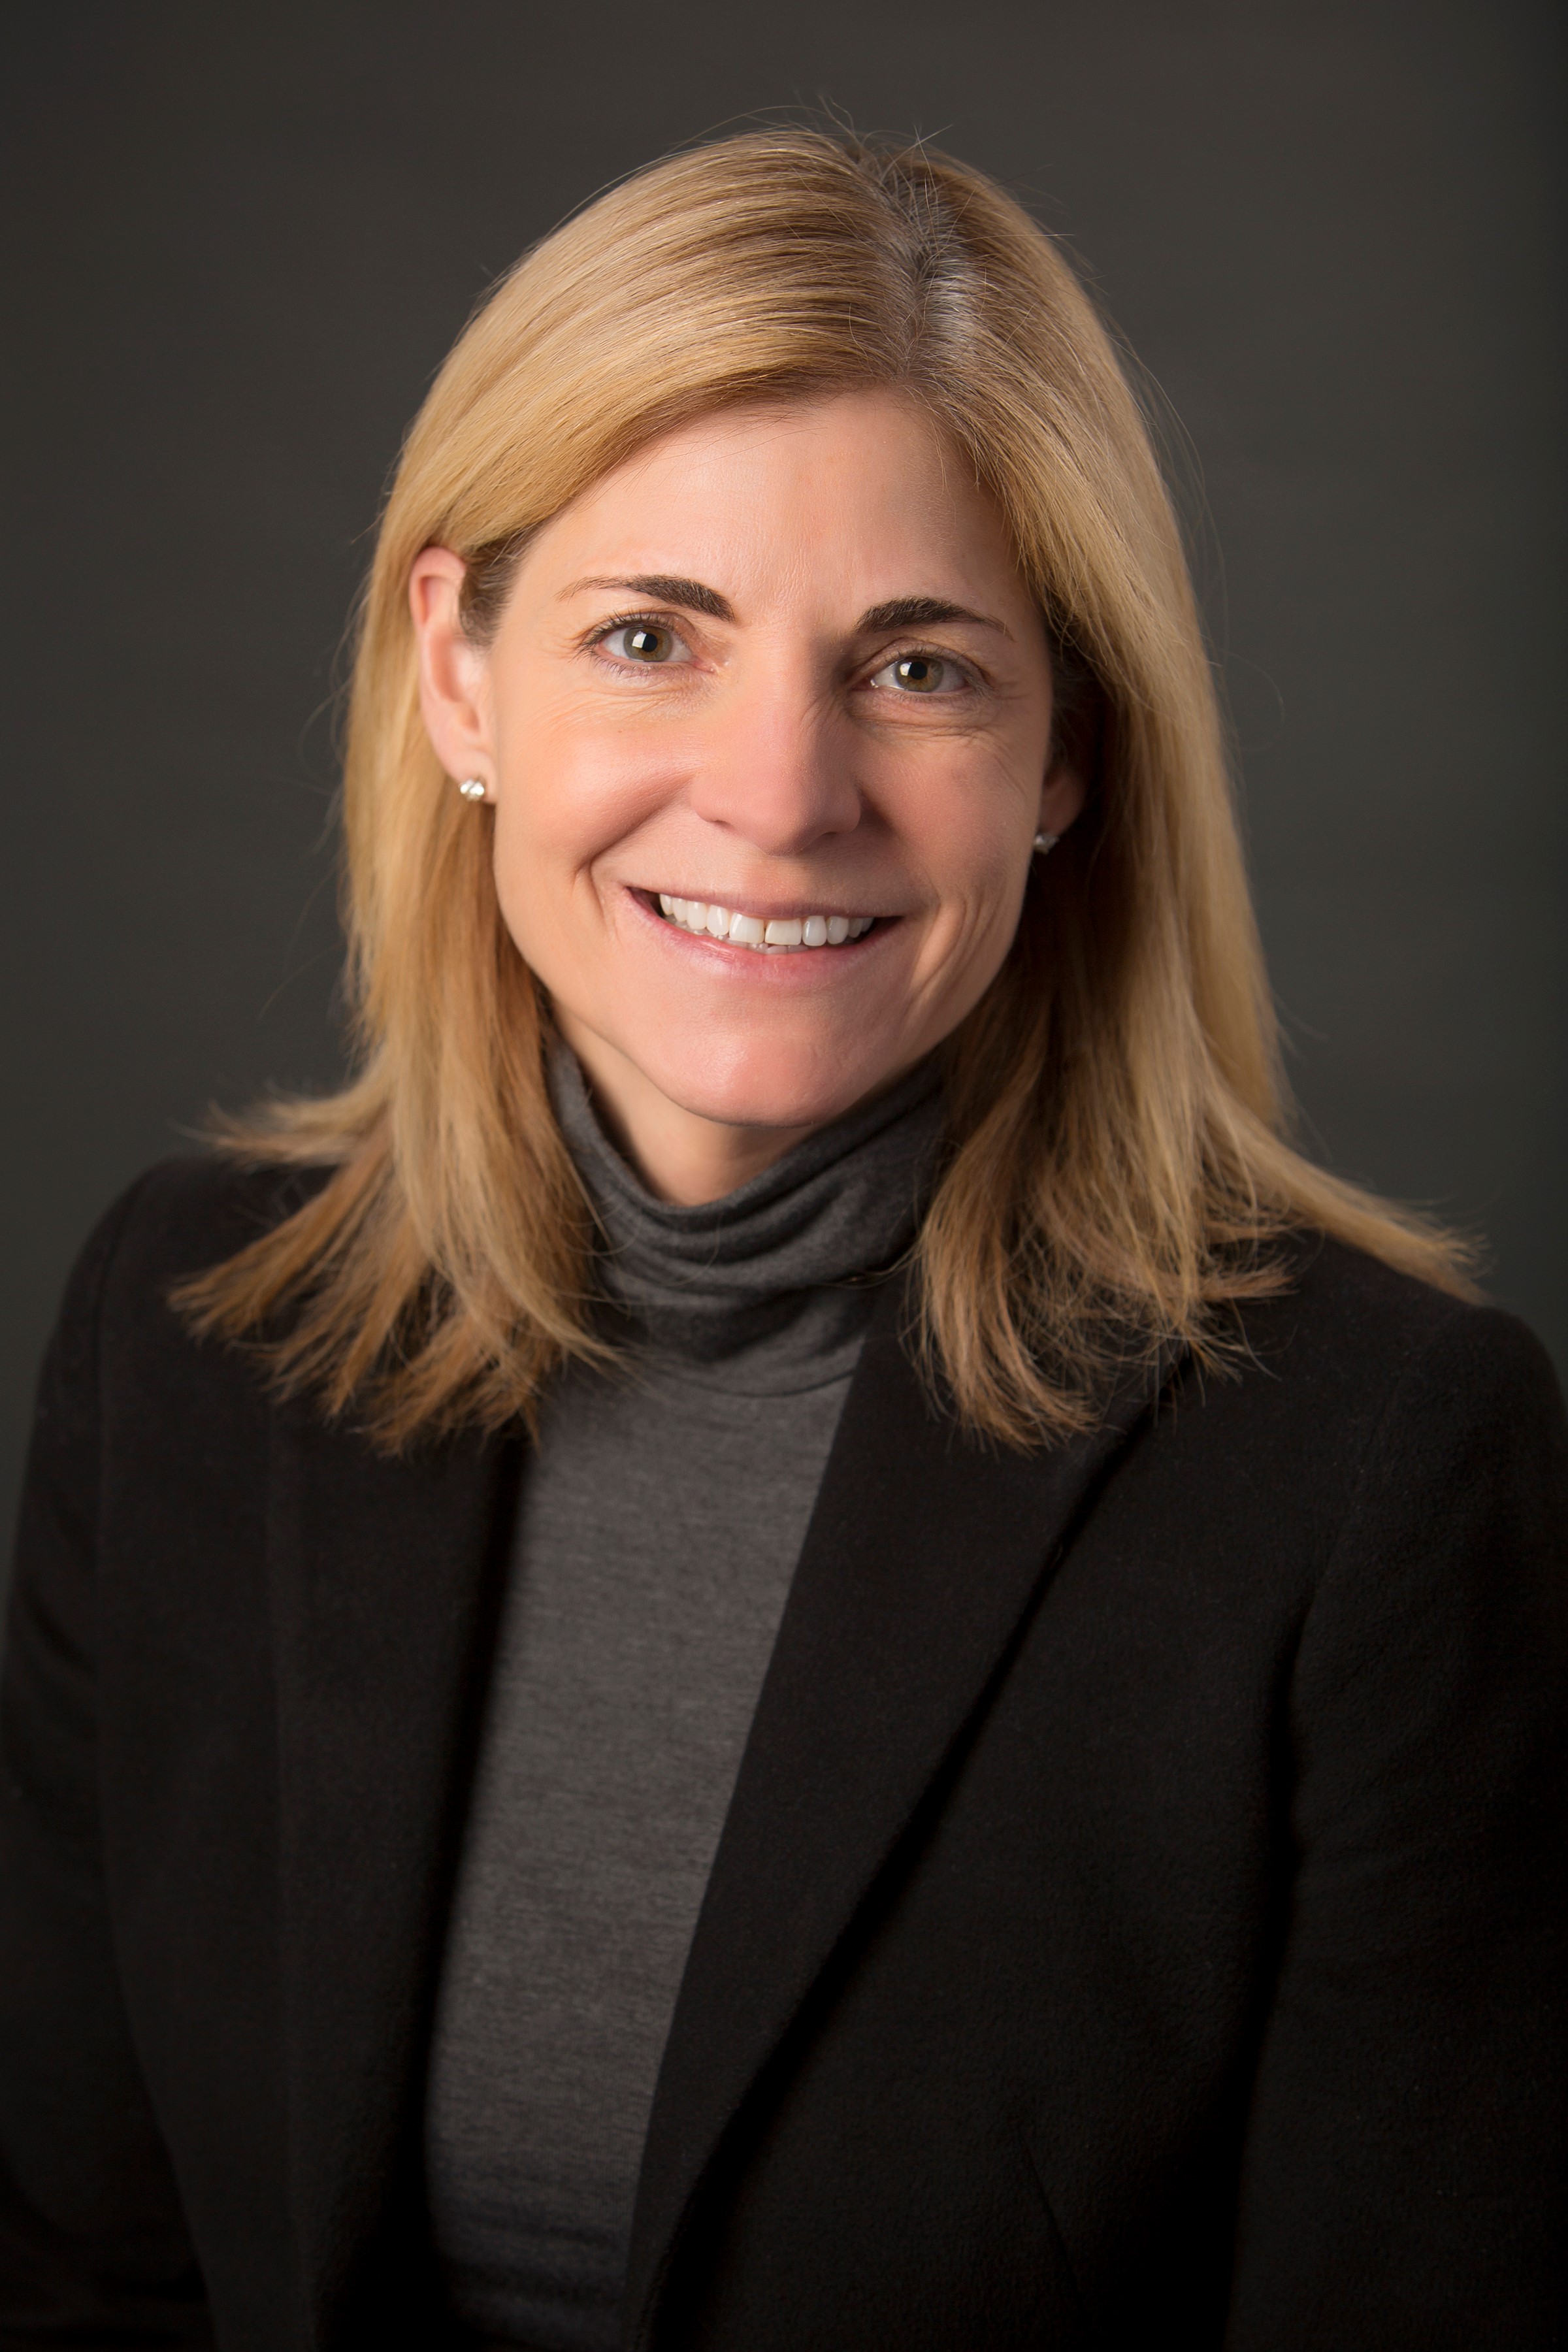 Heather Palmer, MA, MBA, Executive Director and Secretary